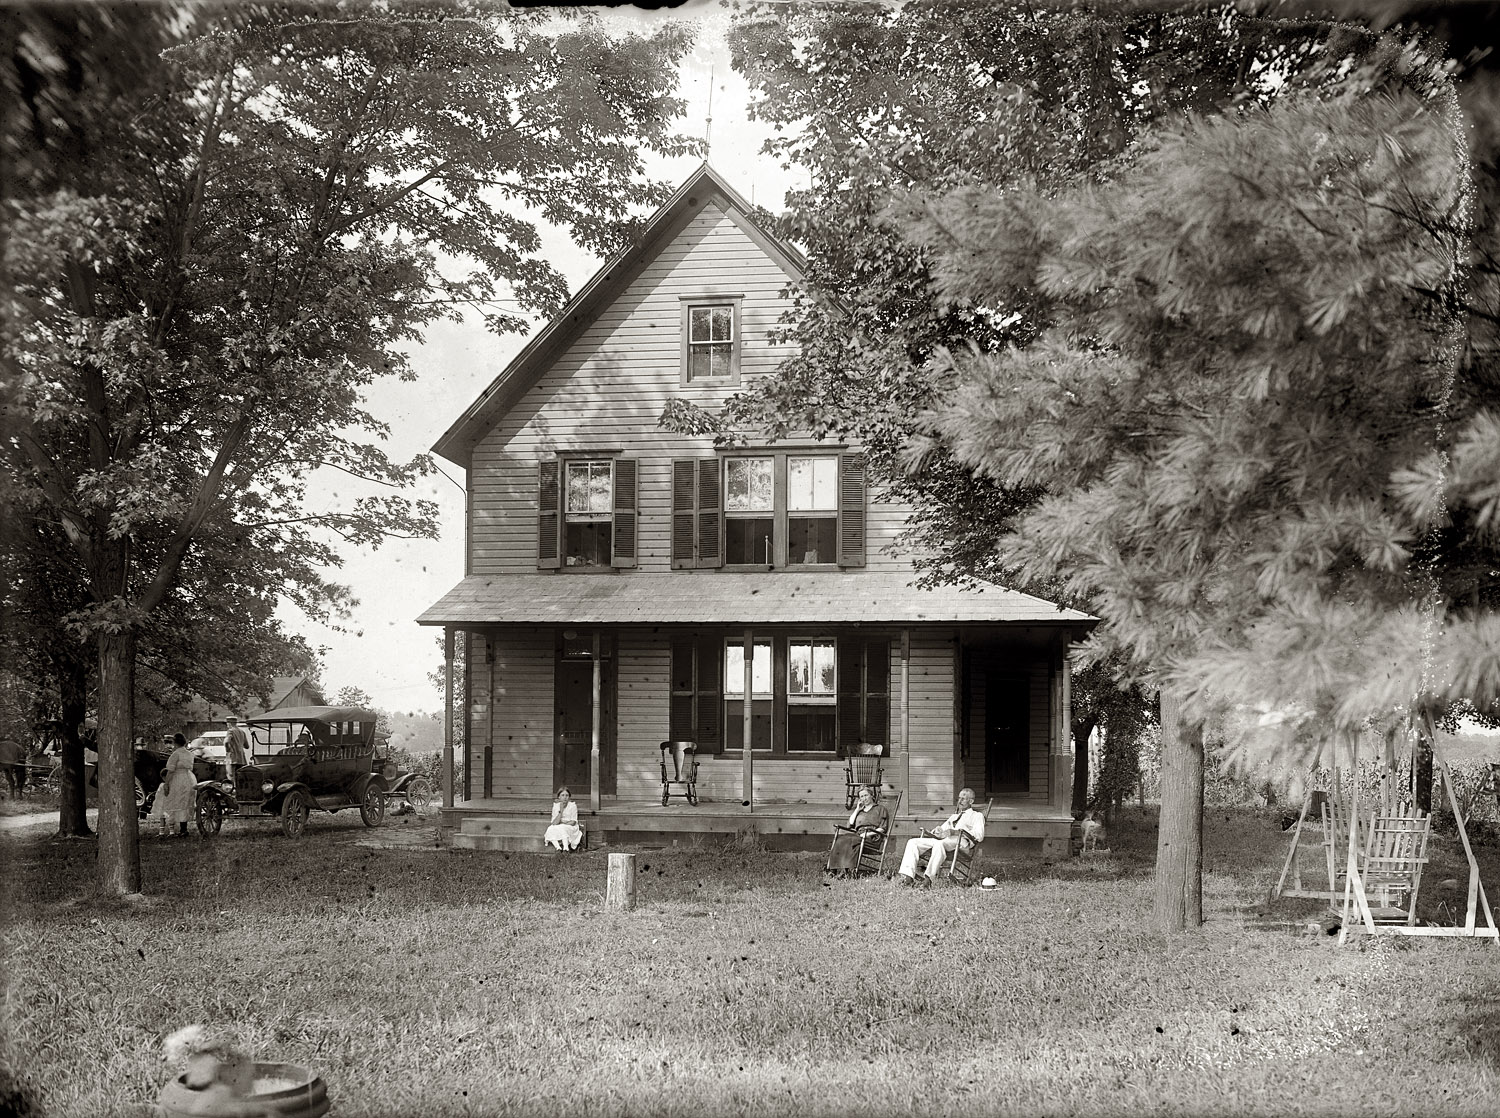 Vienna, Virginia, circa 1922. Summer residence of Iowa senator William S. Kenyon and family. View full size. National Photo Company glass negative.